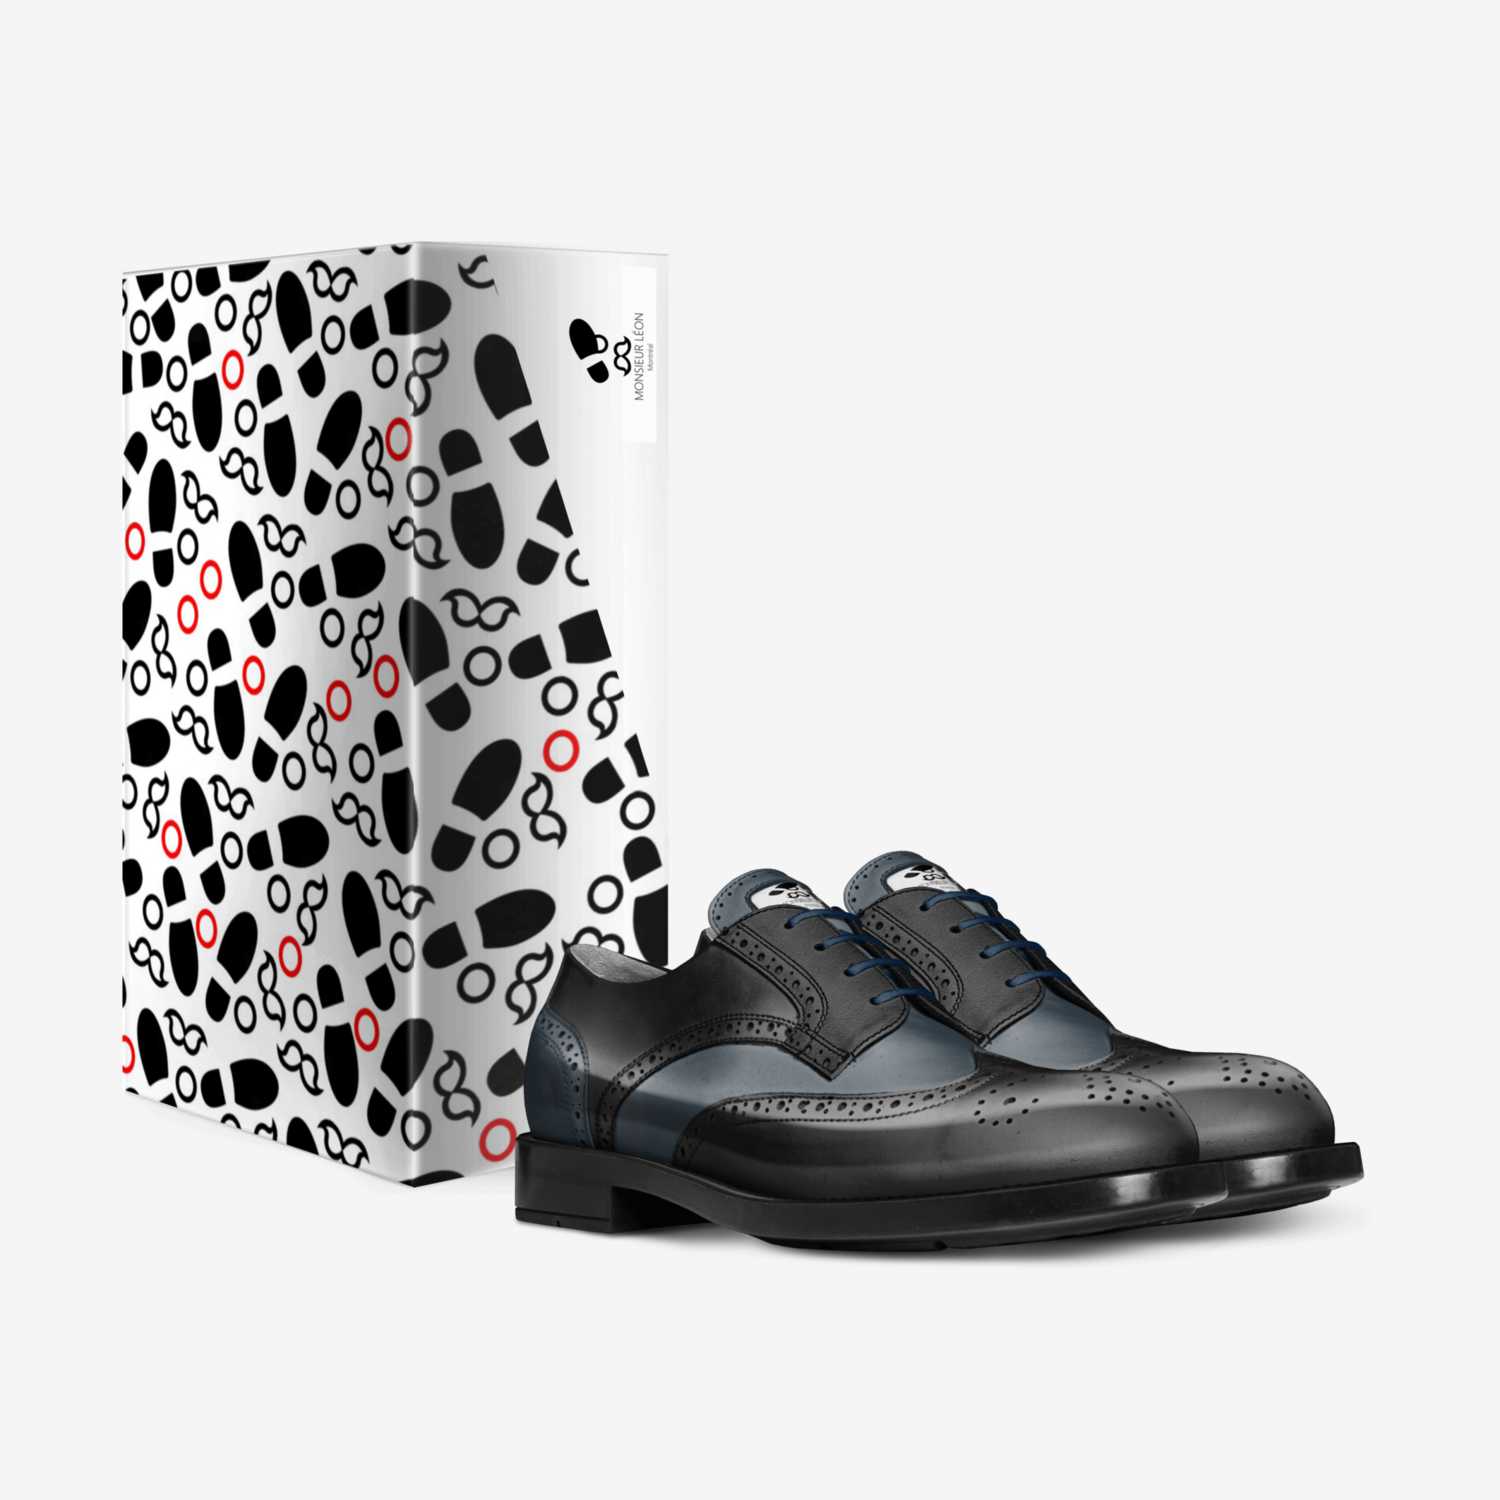 BINOU custom made in Italy shoes by Monsieur Léon | Box view